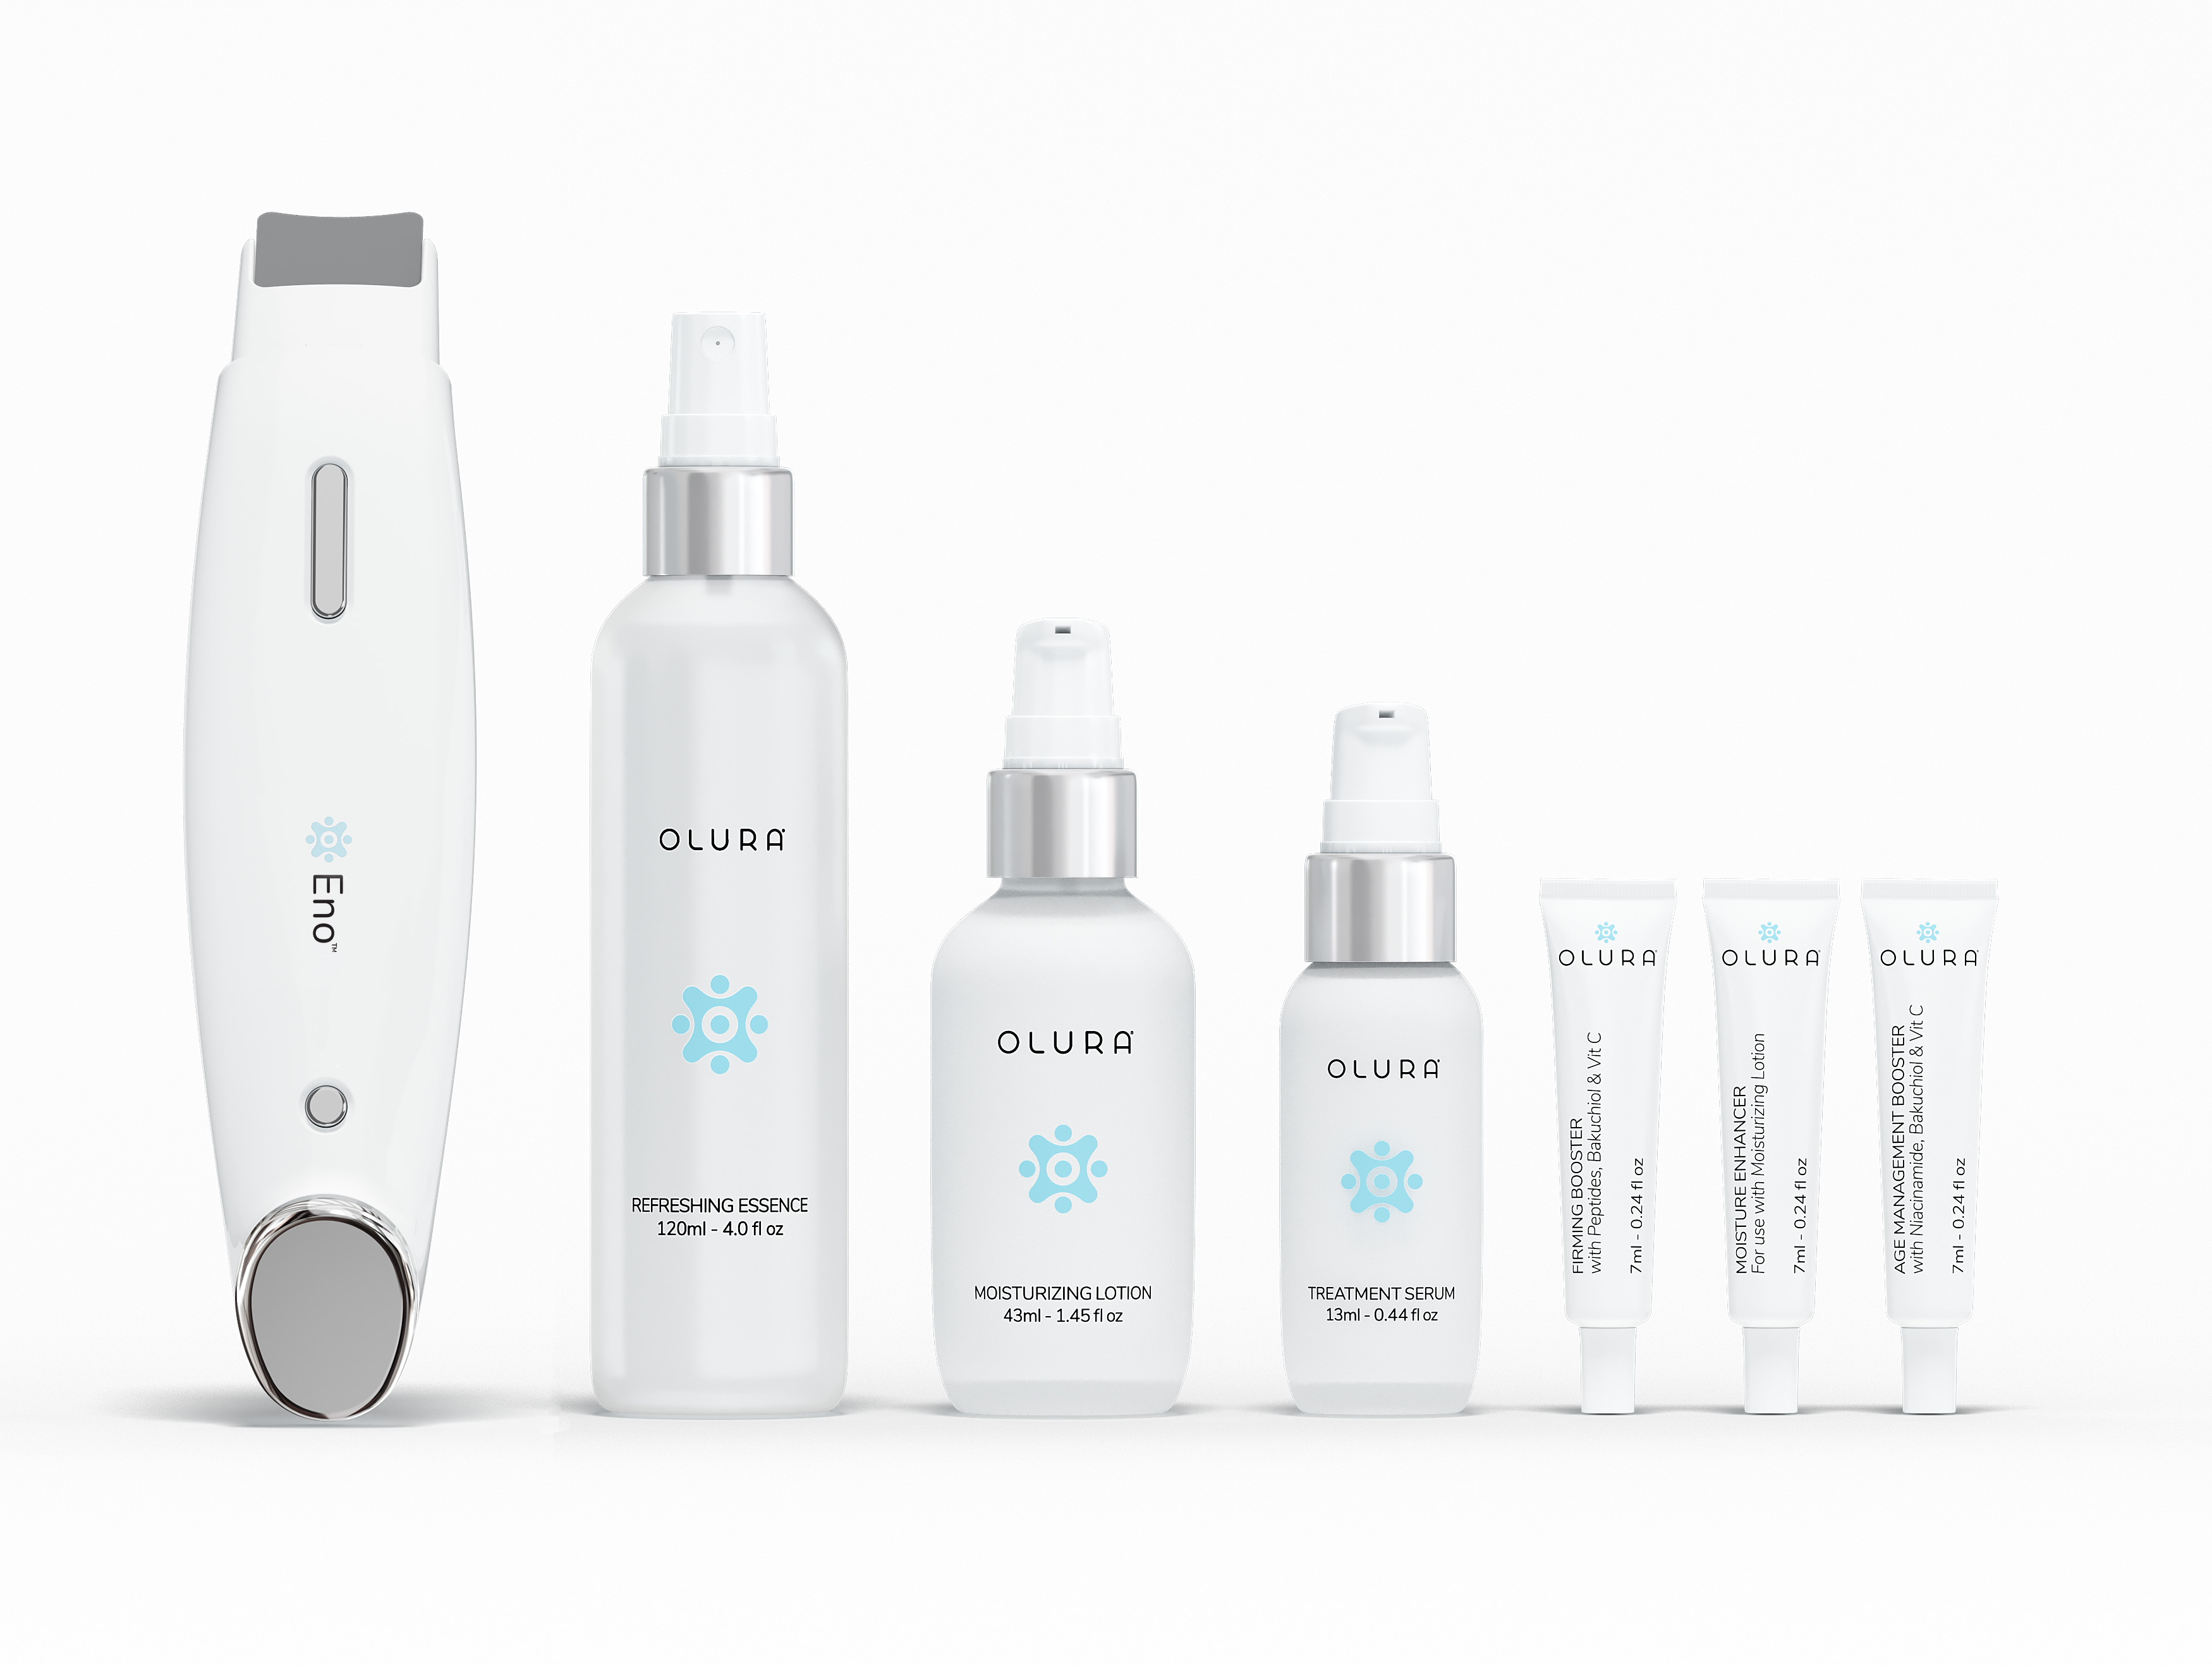 Beauty Tech Brand Olura Raises Series A Investment Round of $1 Million  